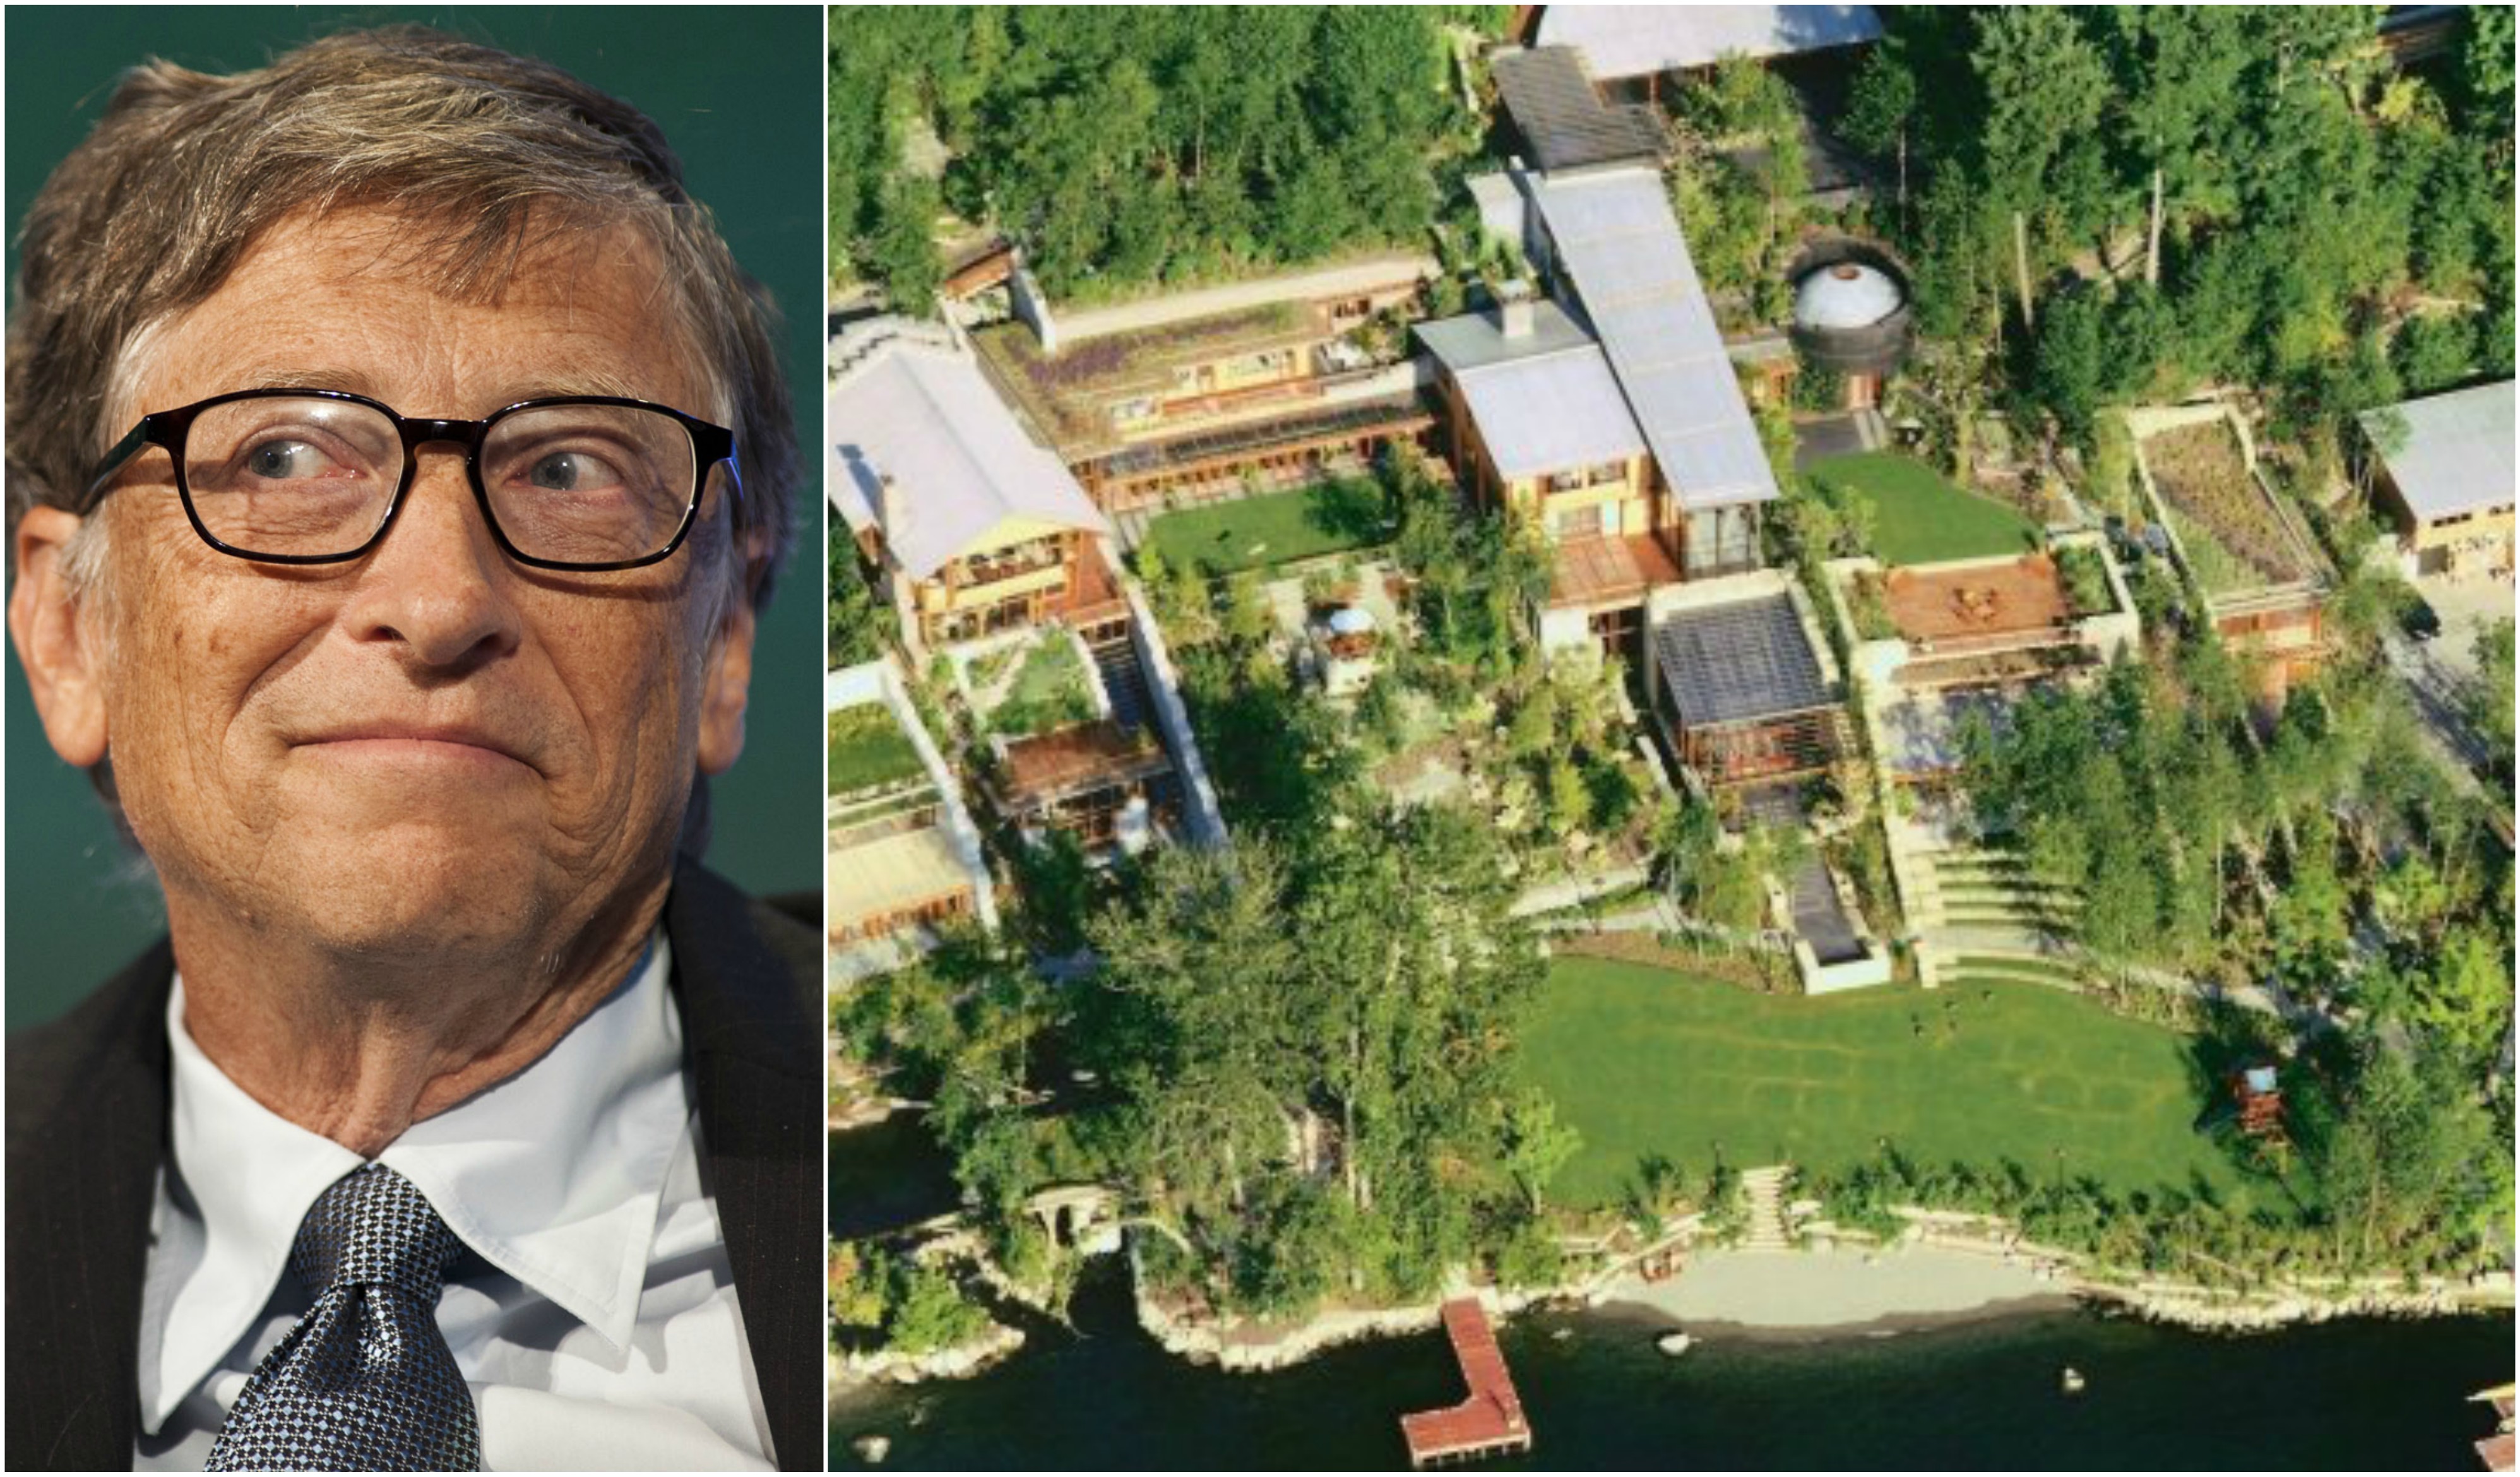 11 Crazy Facts About Bill Gates' Home Xanadu 2.0